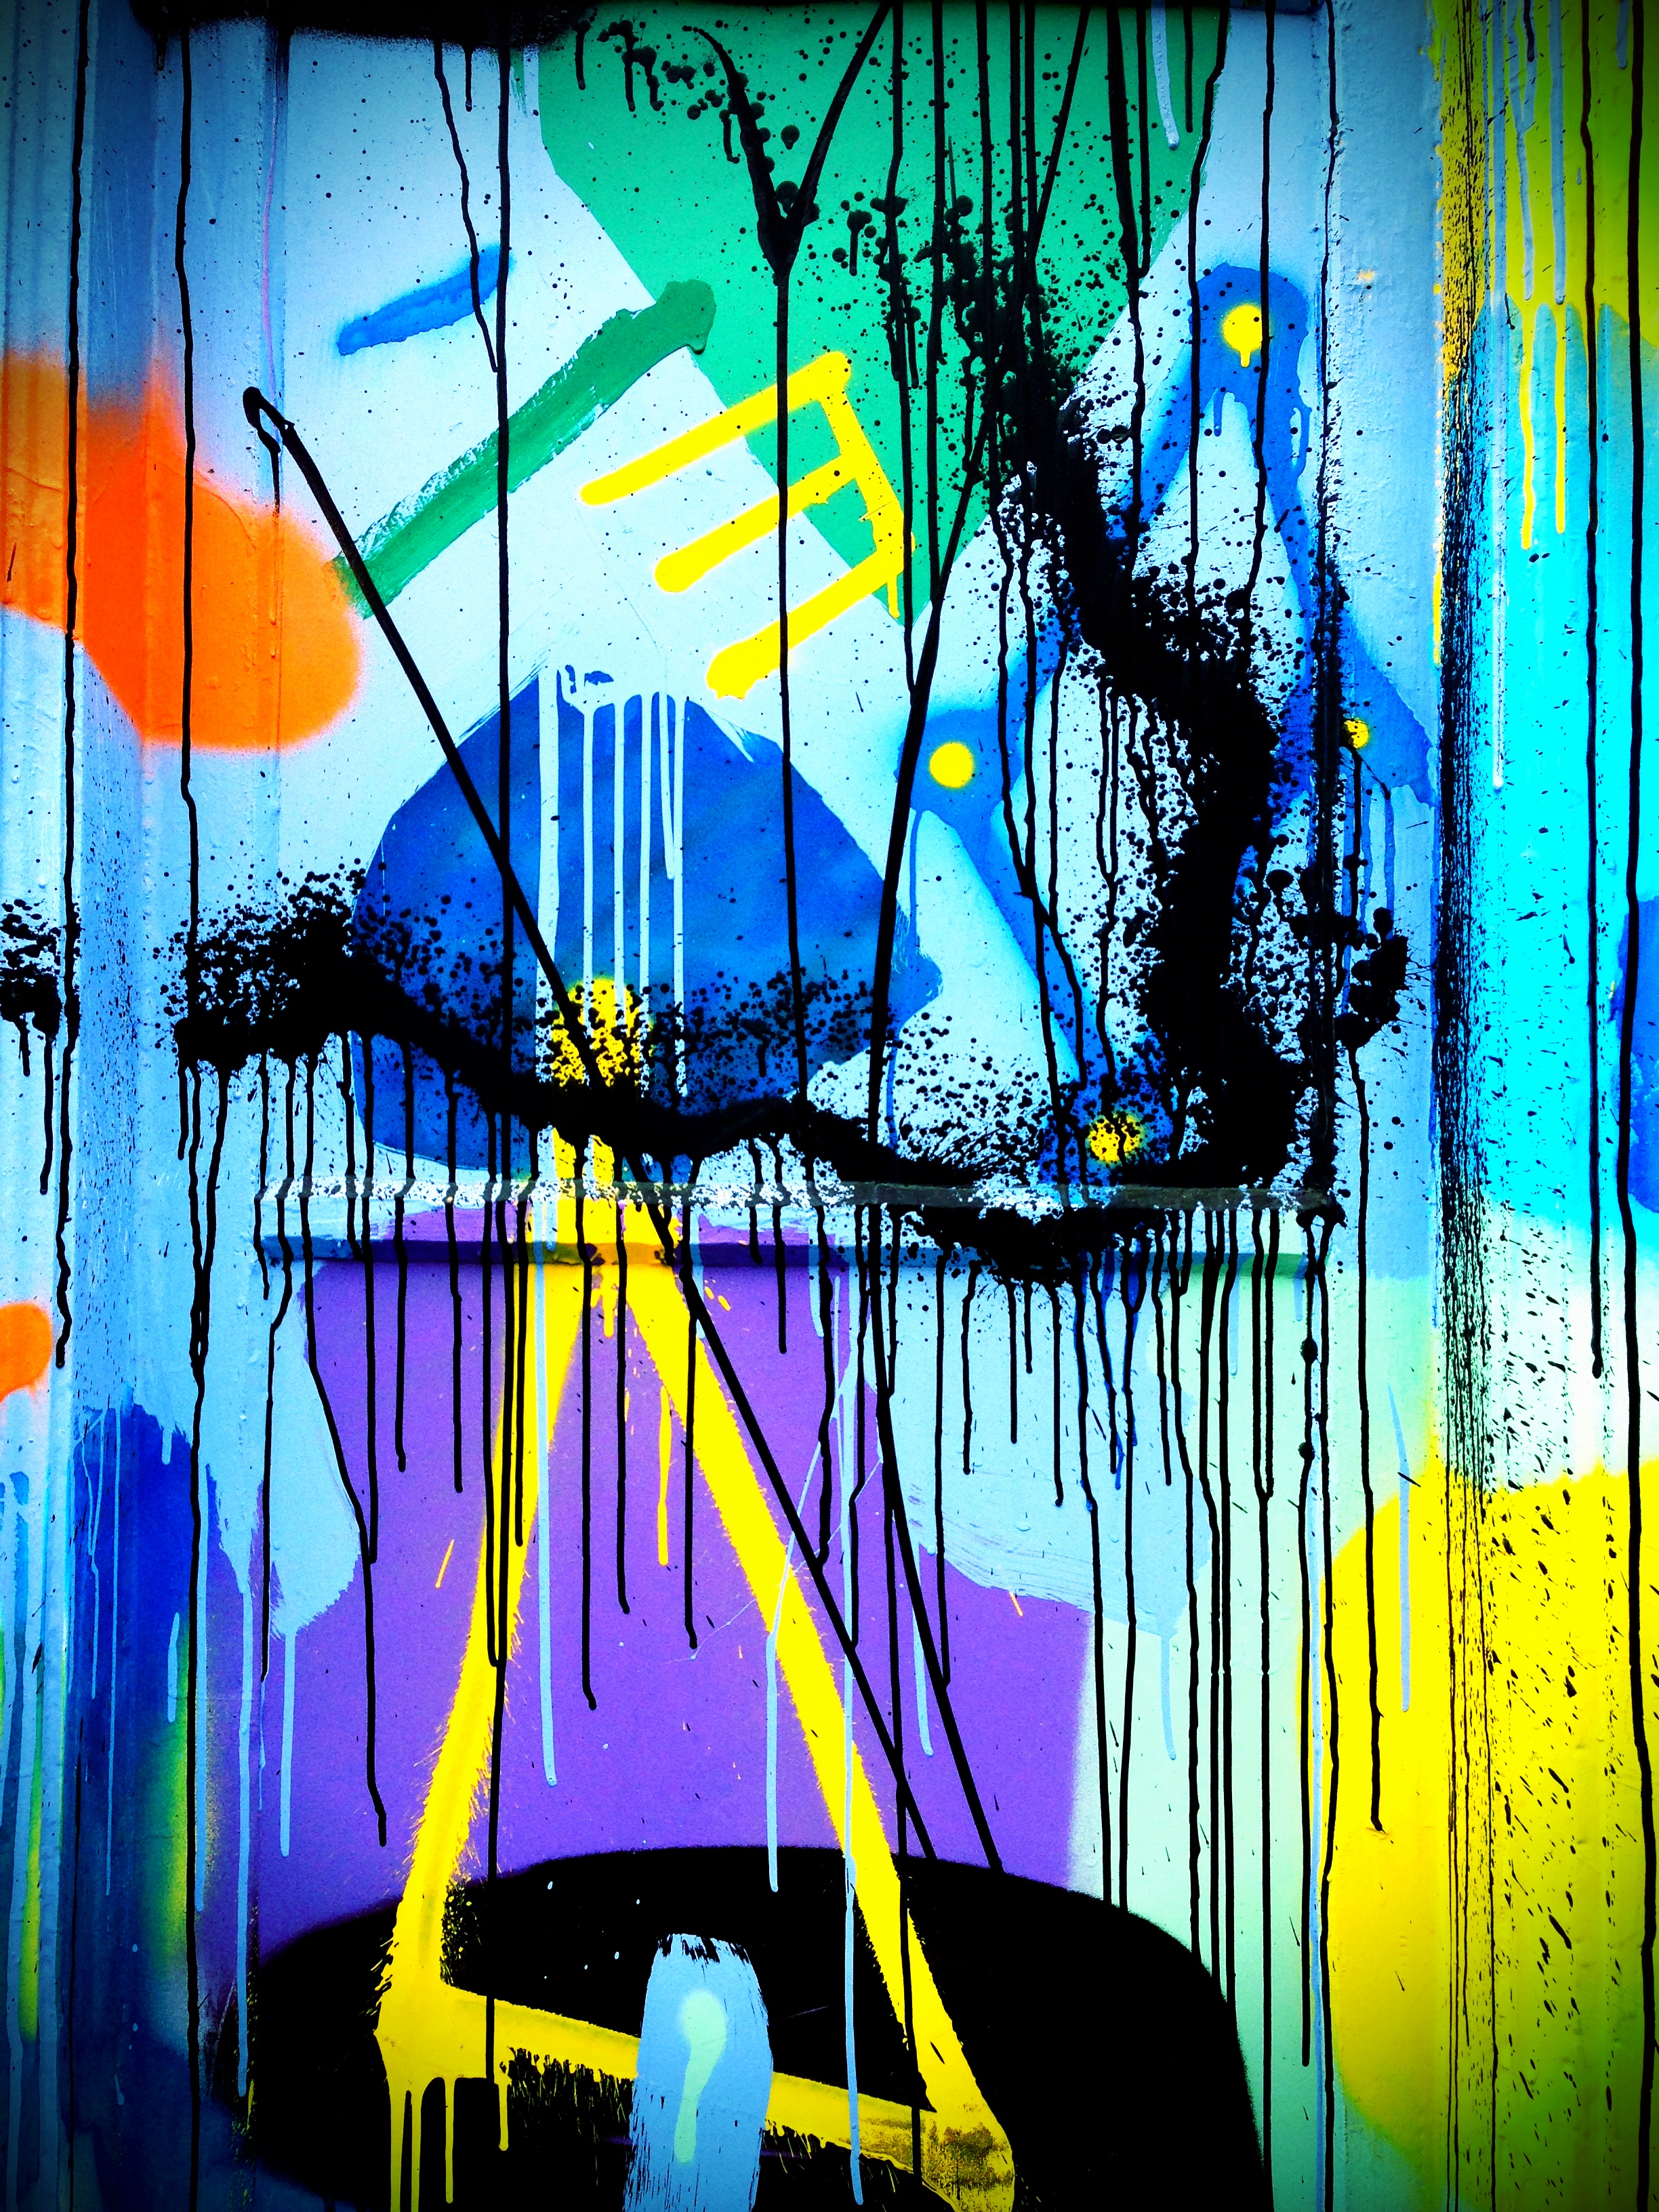 1080p Wallpaper paint, surface, street art, graffiti Wall